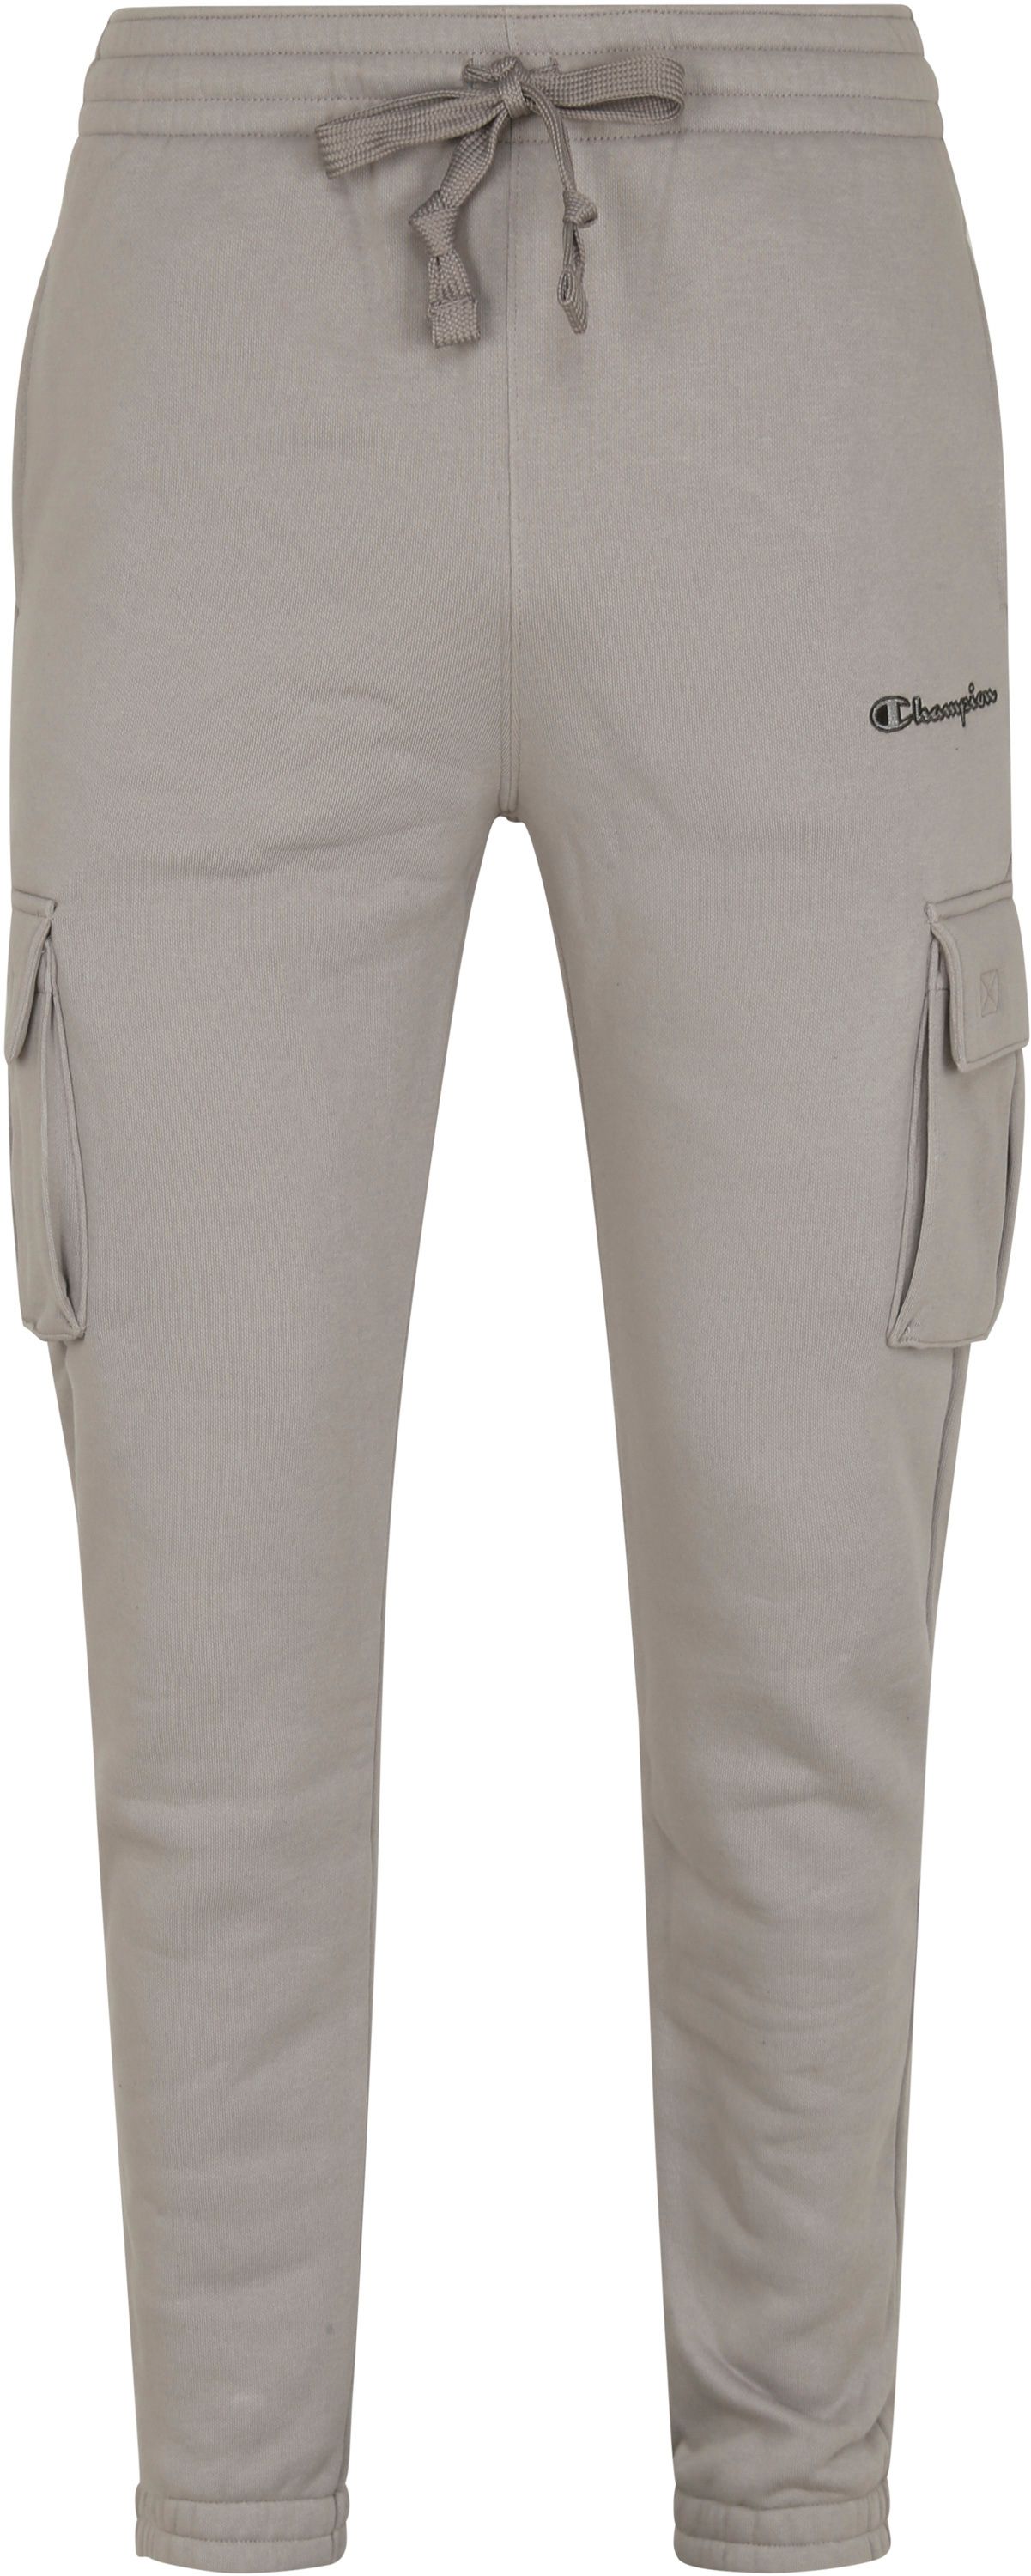 Champion Cargo Sweatpants Grey size L